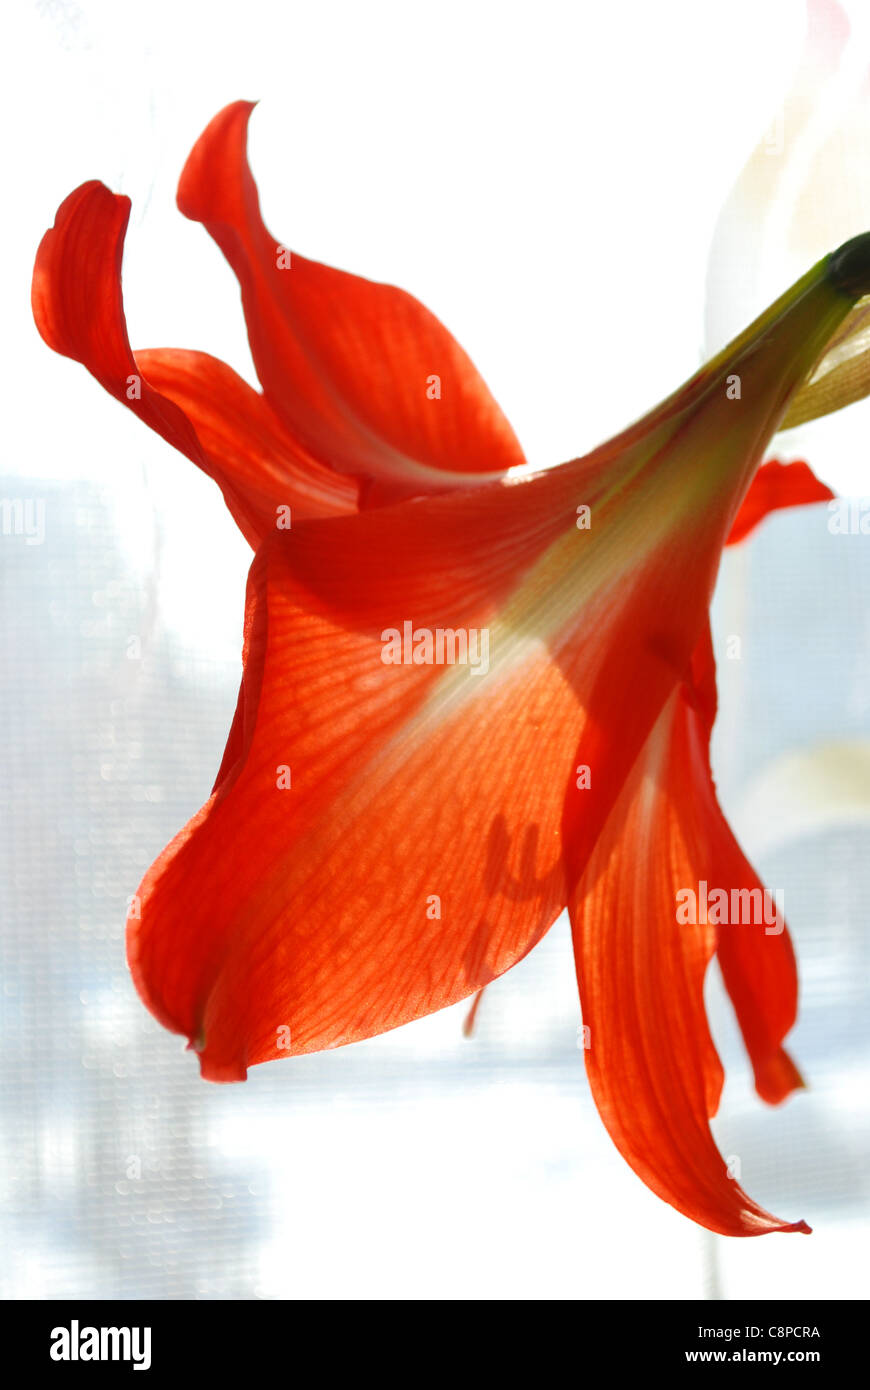 orange lily blossom Stock Photo